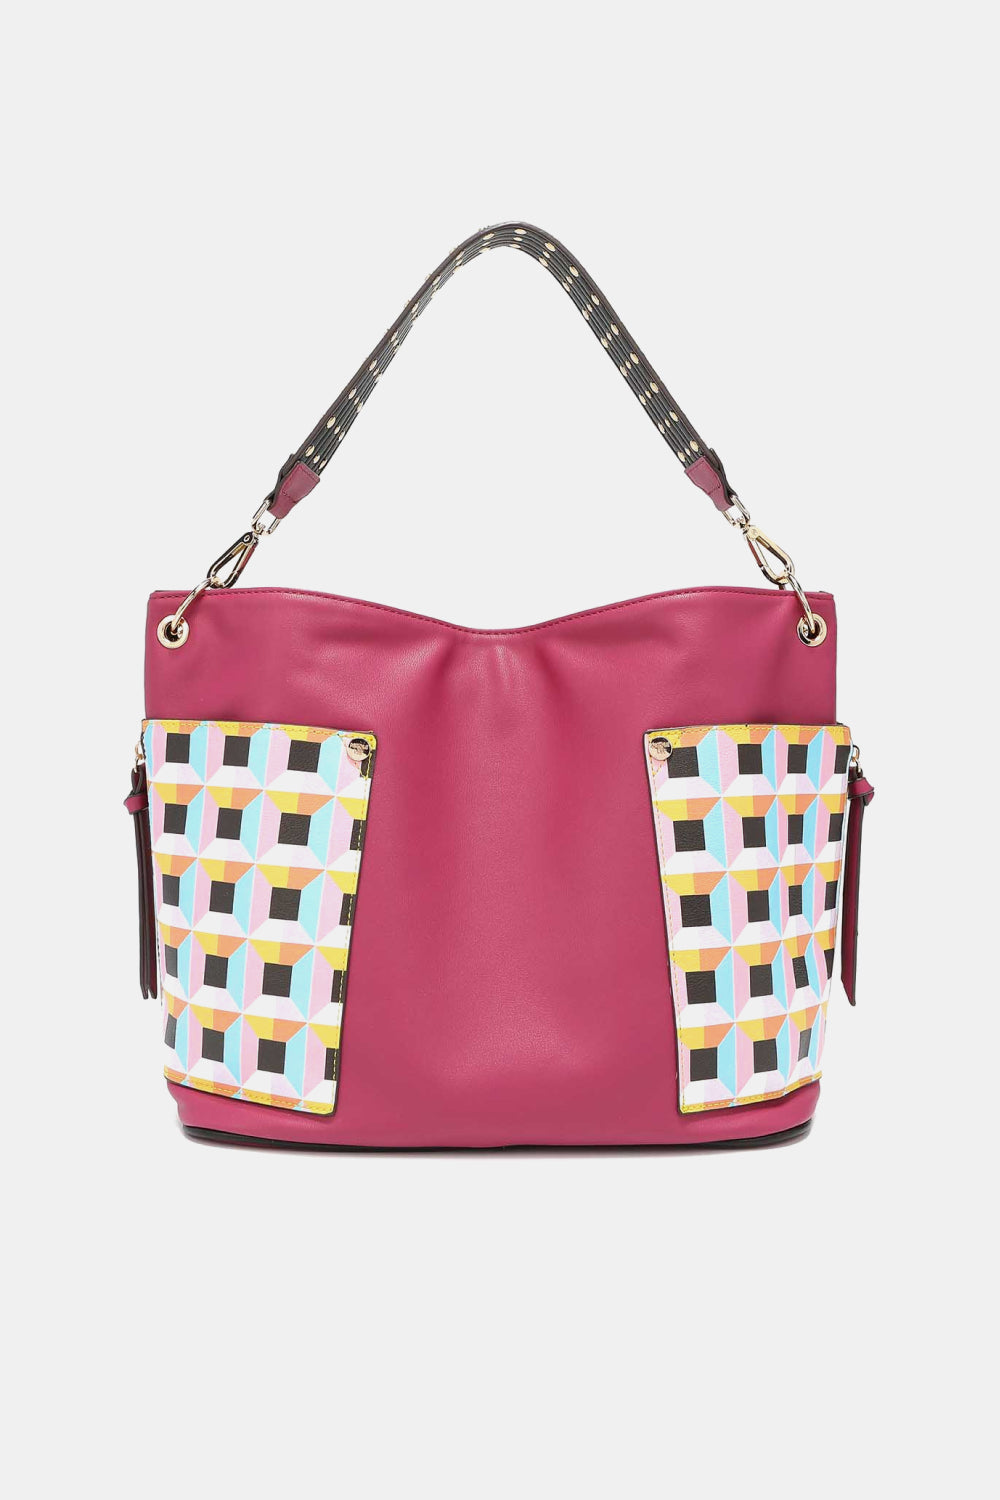 Nicole Lee USA Quihn 3-Piece Handbag Set - TiffanyzKlozet